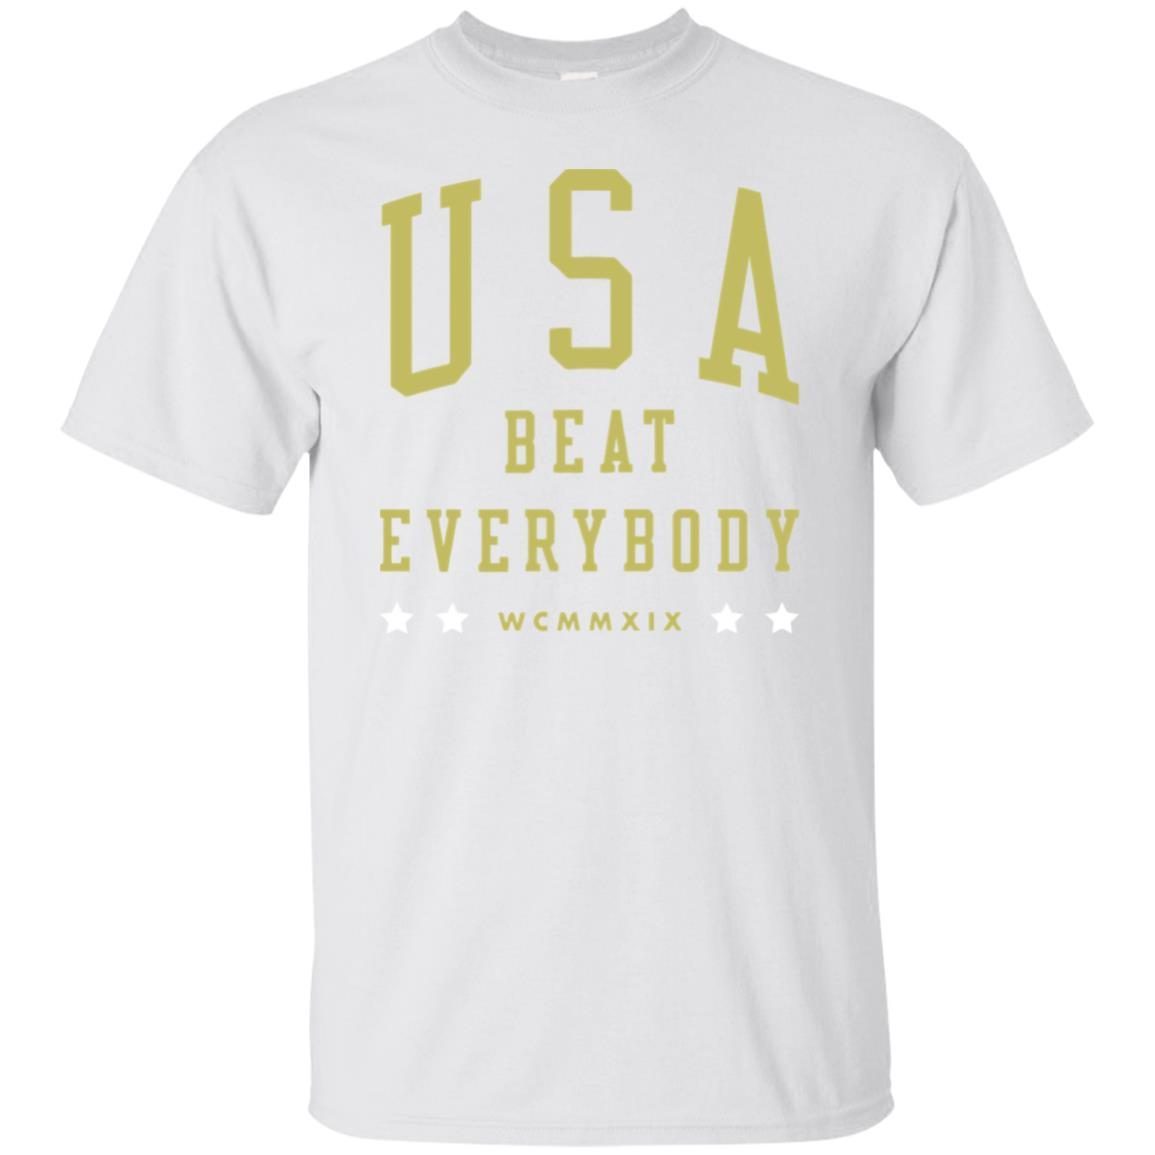 Usa beat everybody t shirt usa vs everybody t shirt - OrderQuilt.com